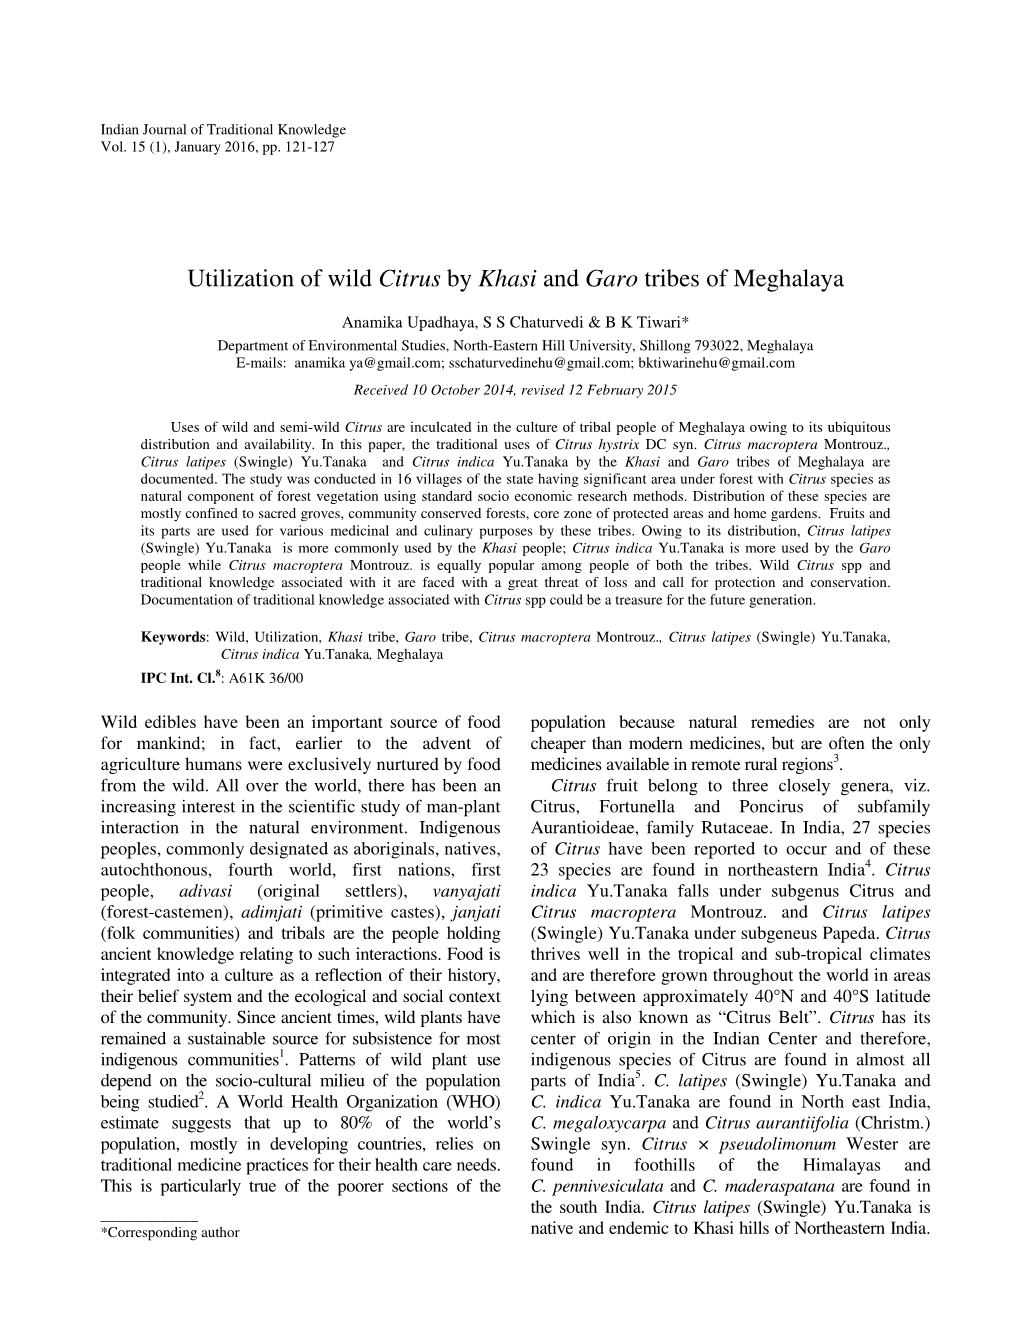 Utilization of Wild Citrus by Khasi and Garo Tribes of Meghalaya